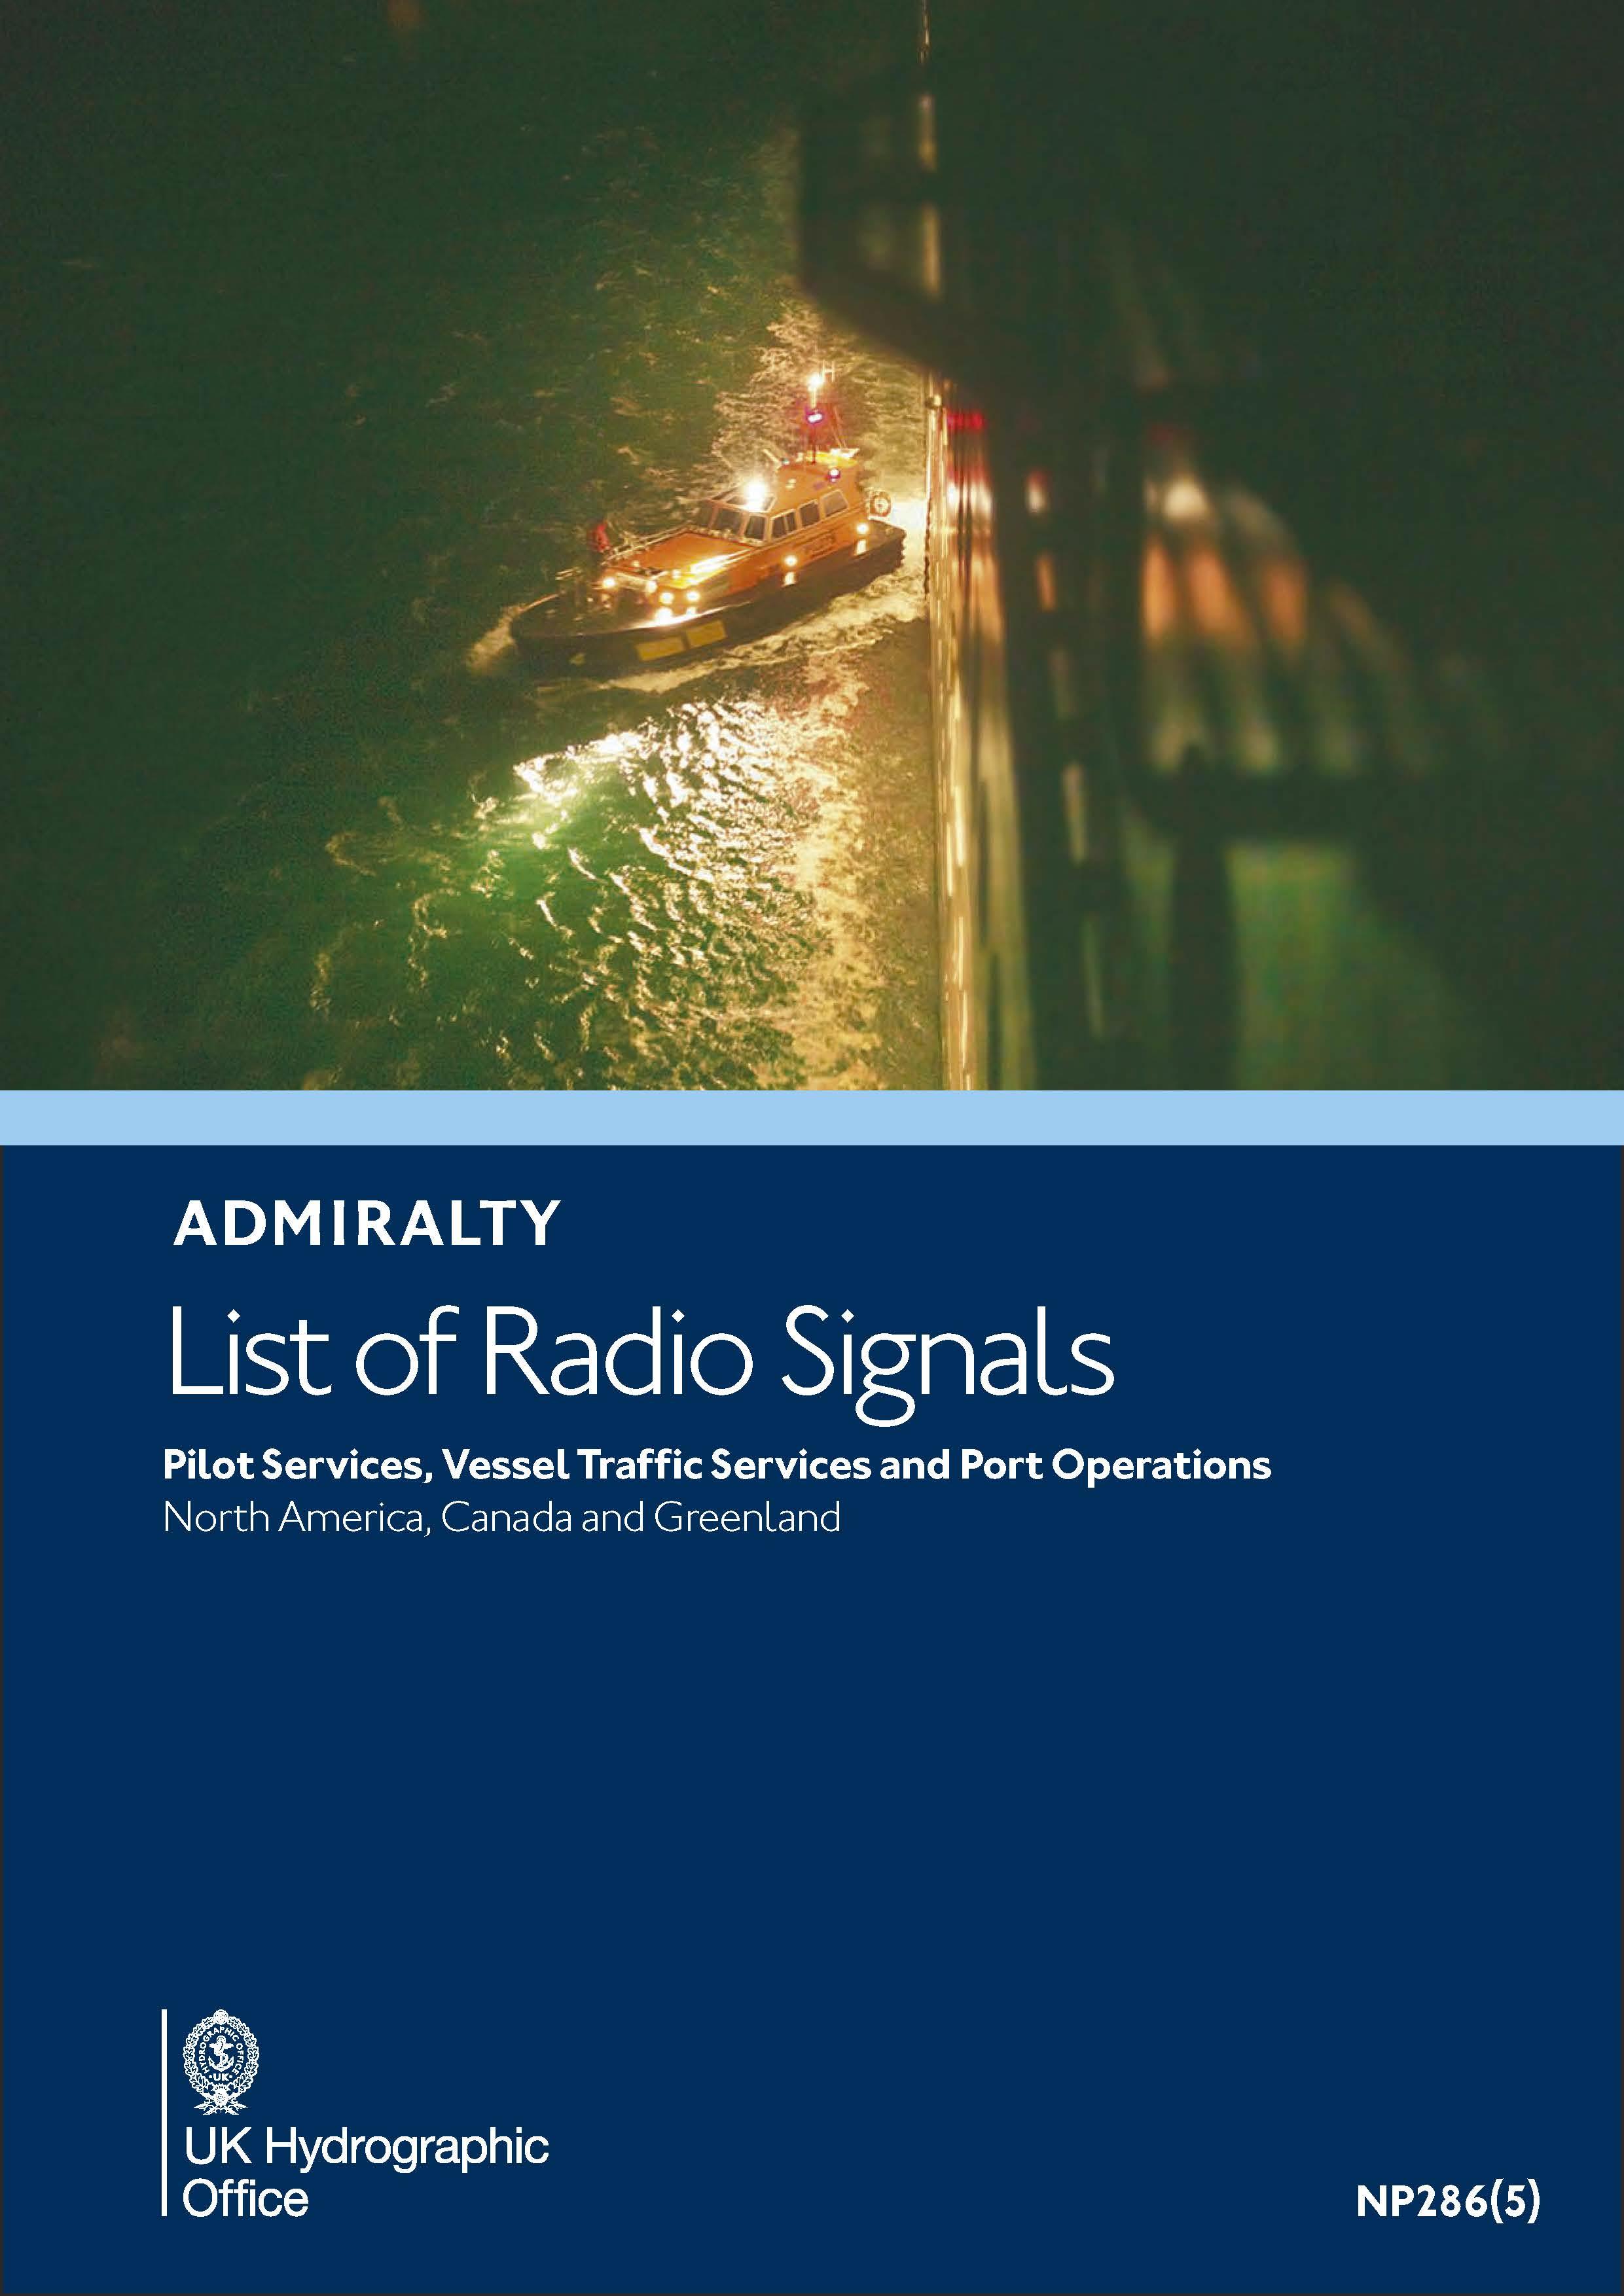 ADMIRALTY NP286(5) RadioSignals Pilot, VTS & Port Ops - North-America (USA, Canada, Greenland)